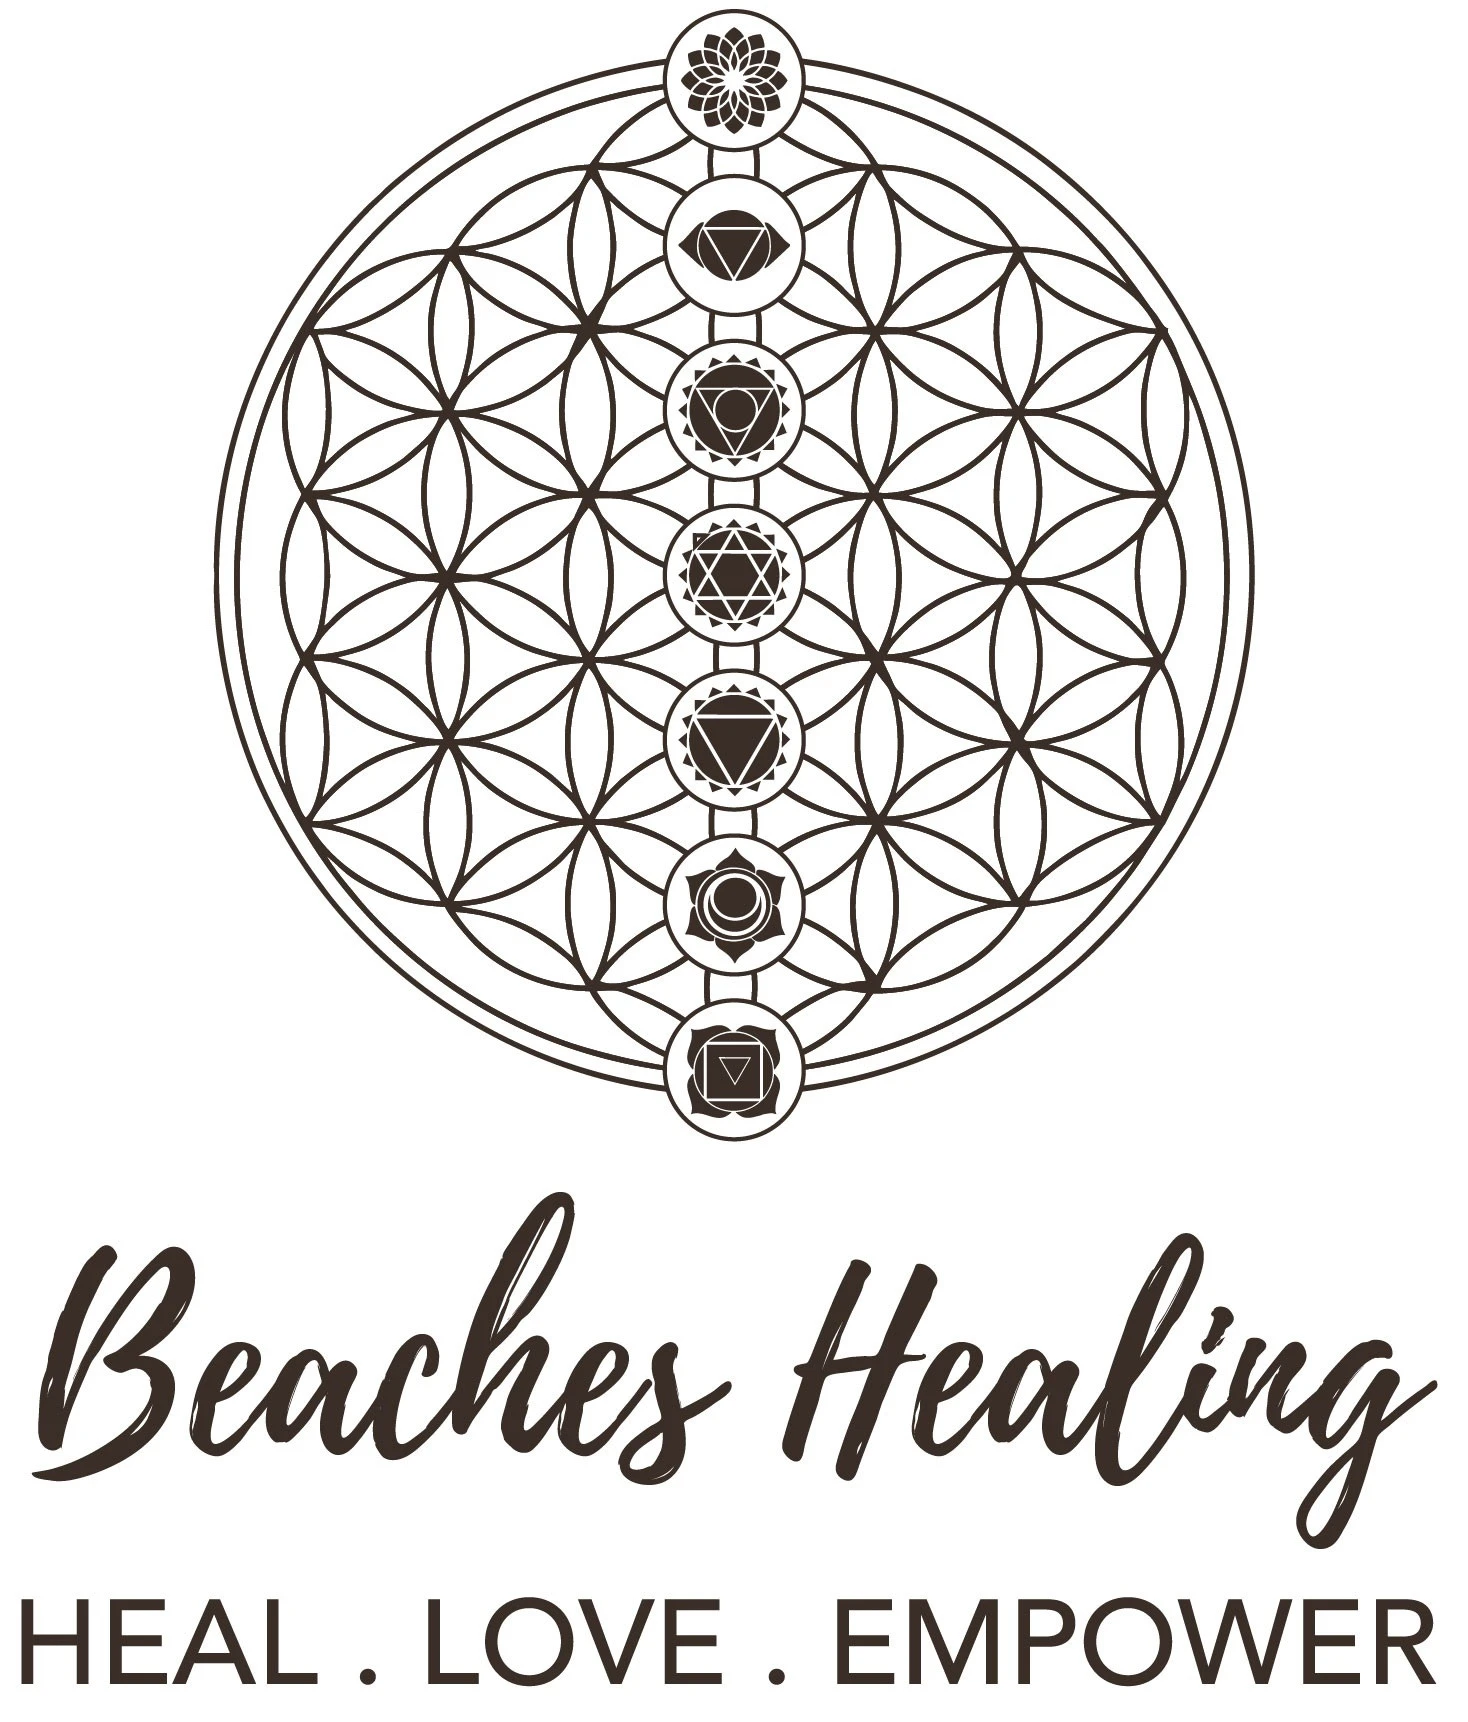 Beaches Healing